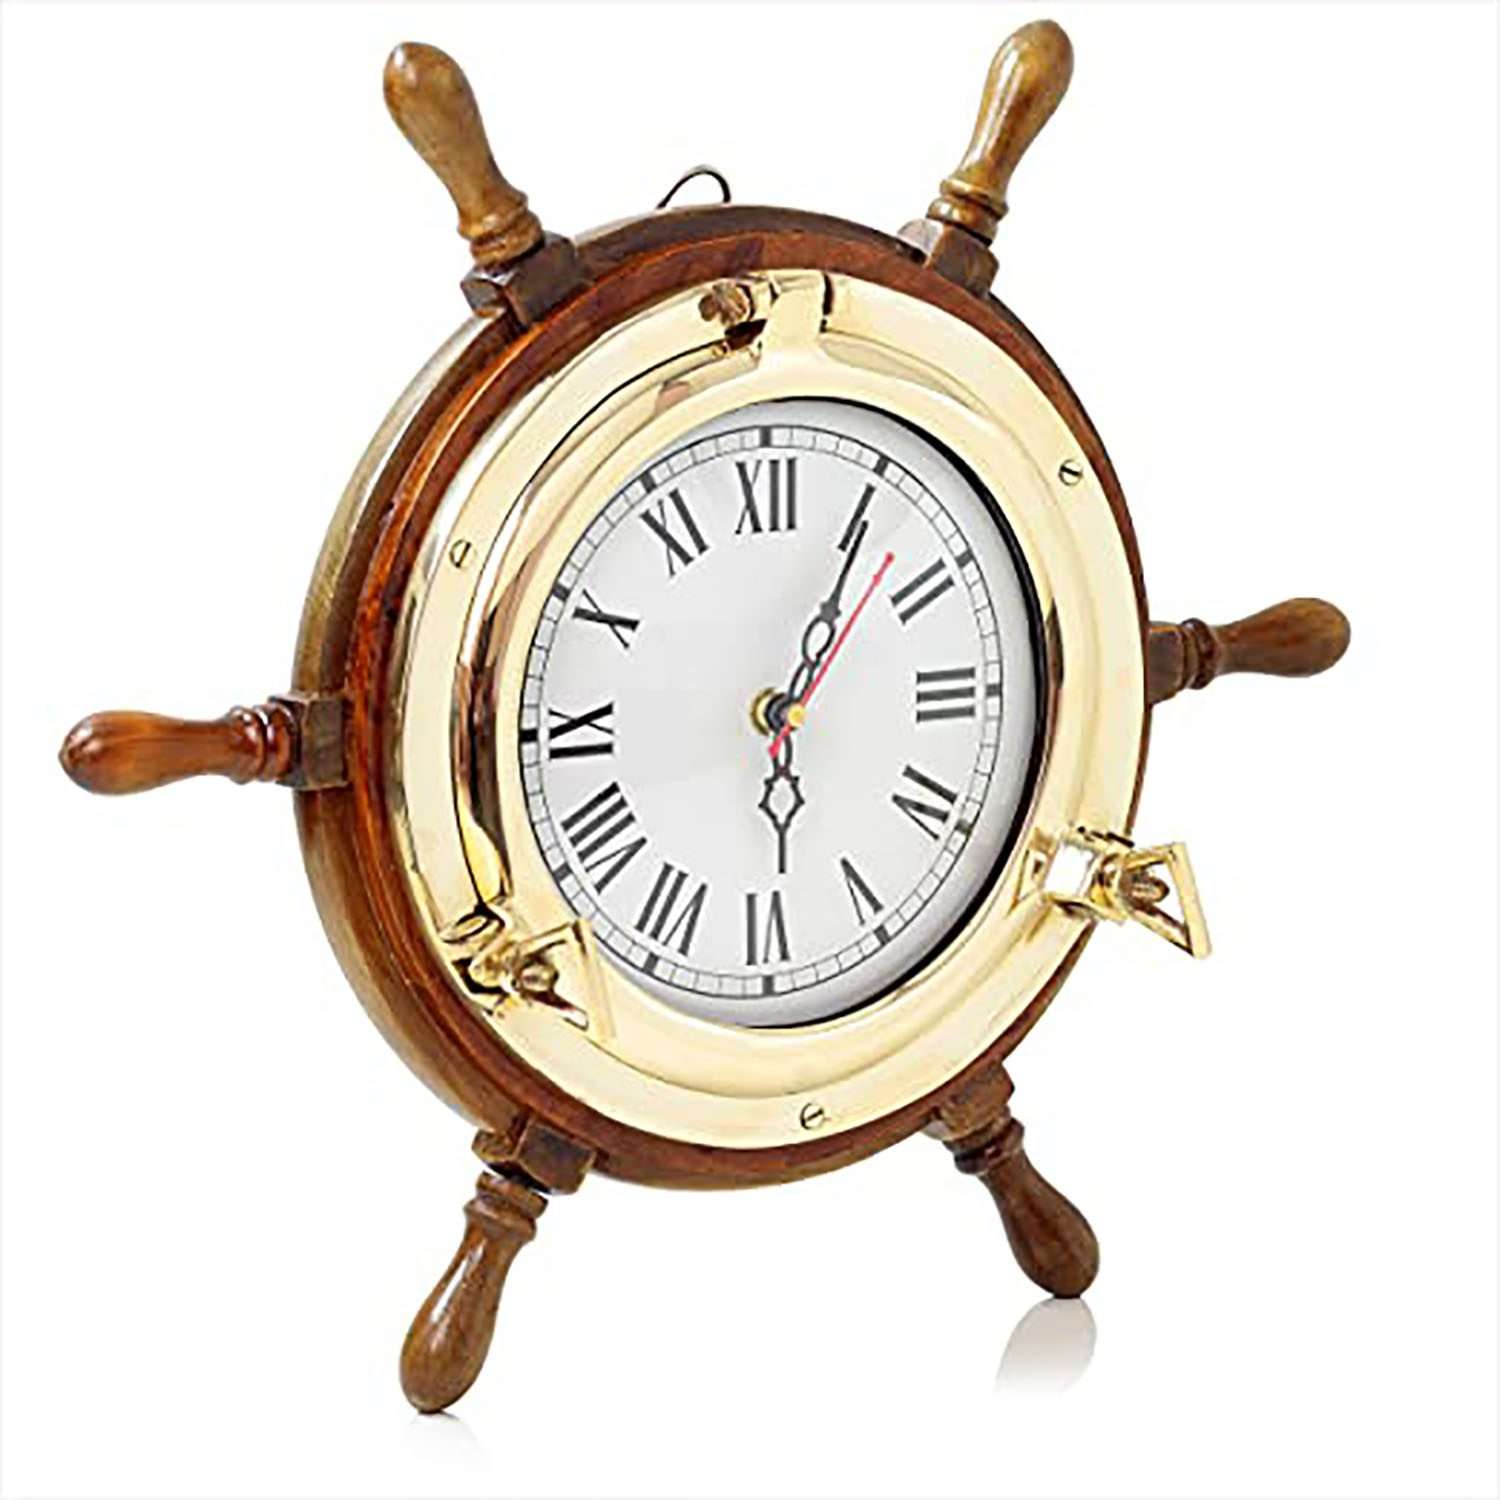 Handcrafted Wooden Ship Wheel Wall Clock | Vintage Brass Frame Wall Clock- Wall Décor